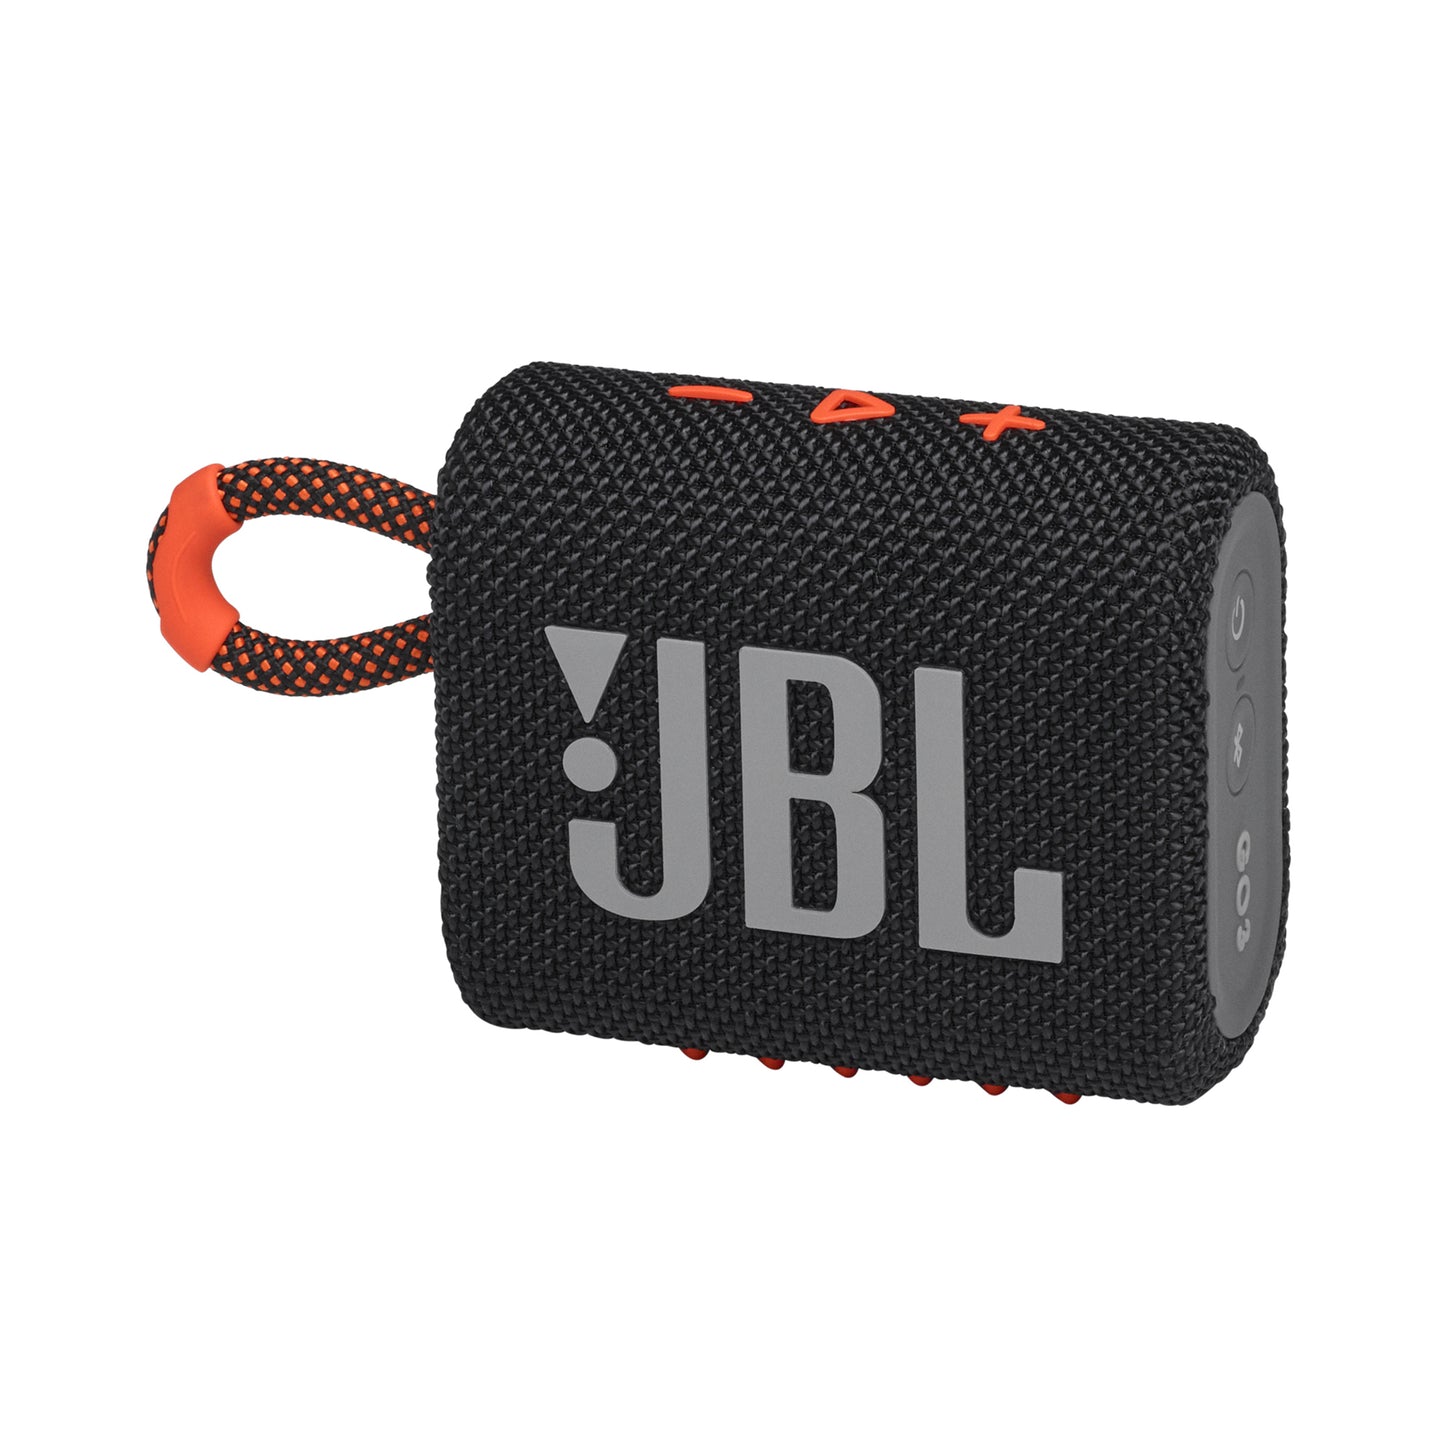 JBL GO 3 Portable Bluetooth Speaker - Black Orange